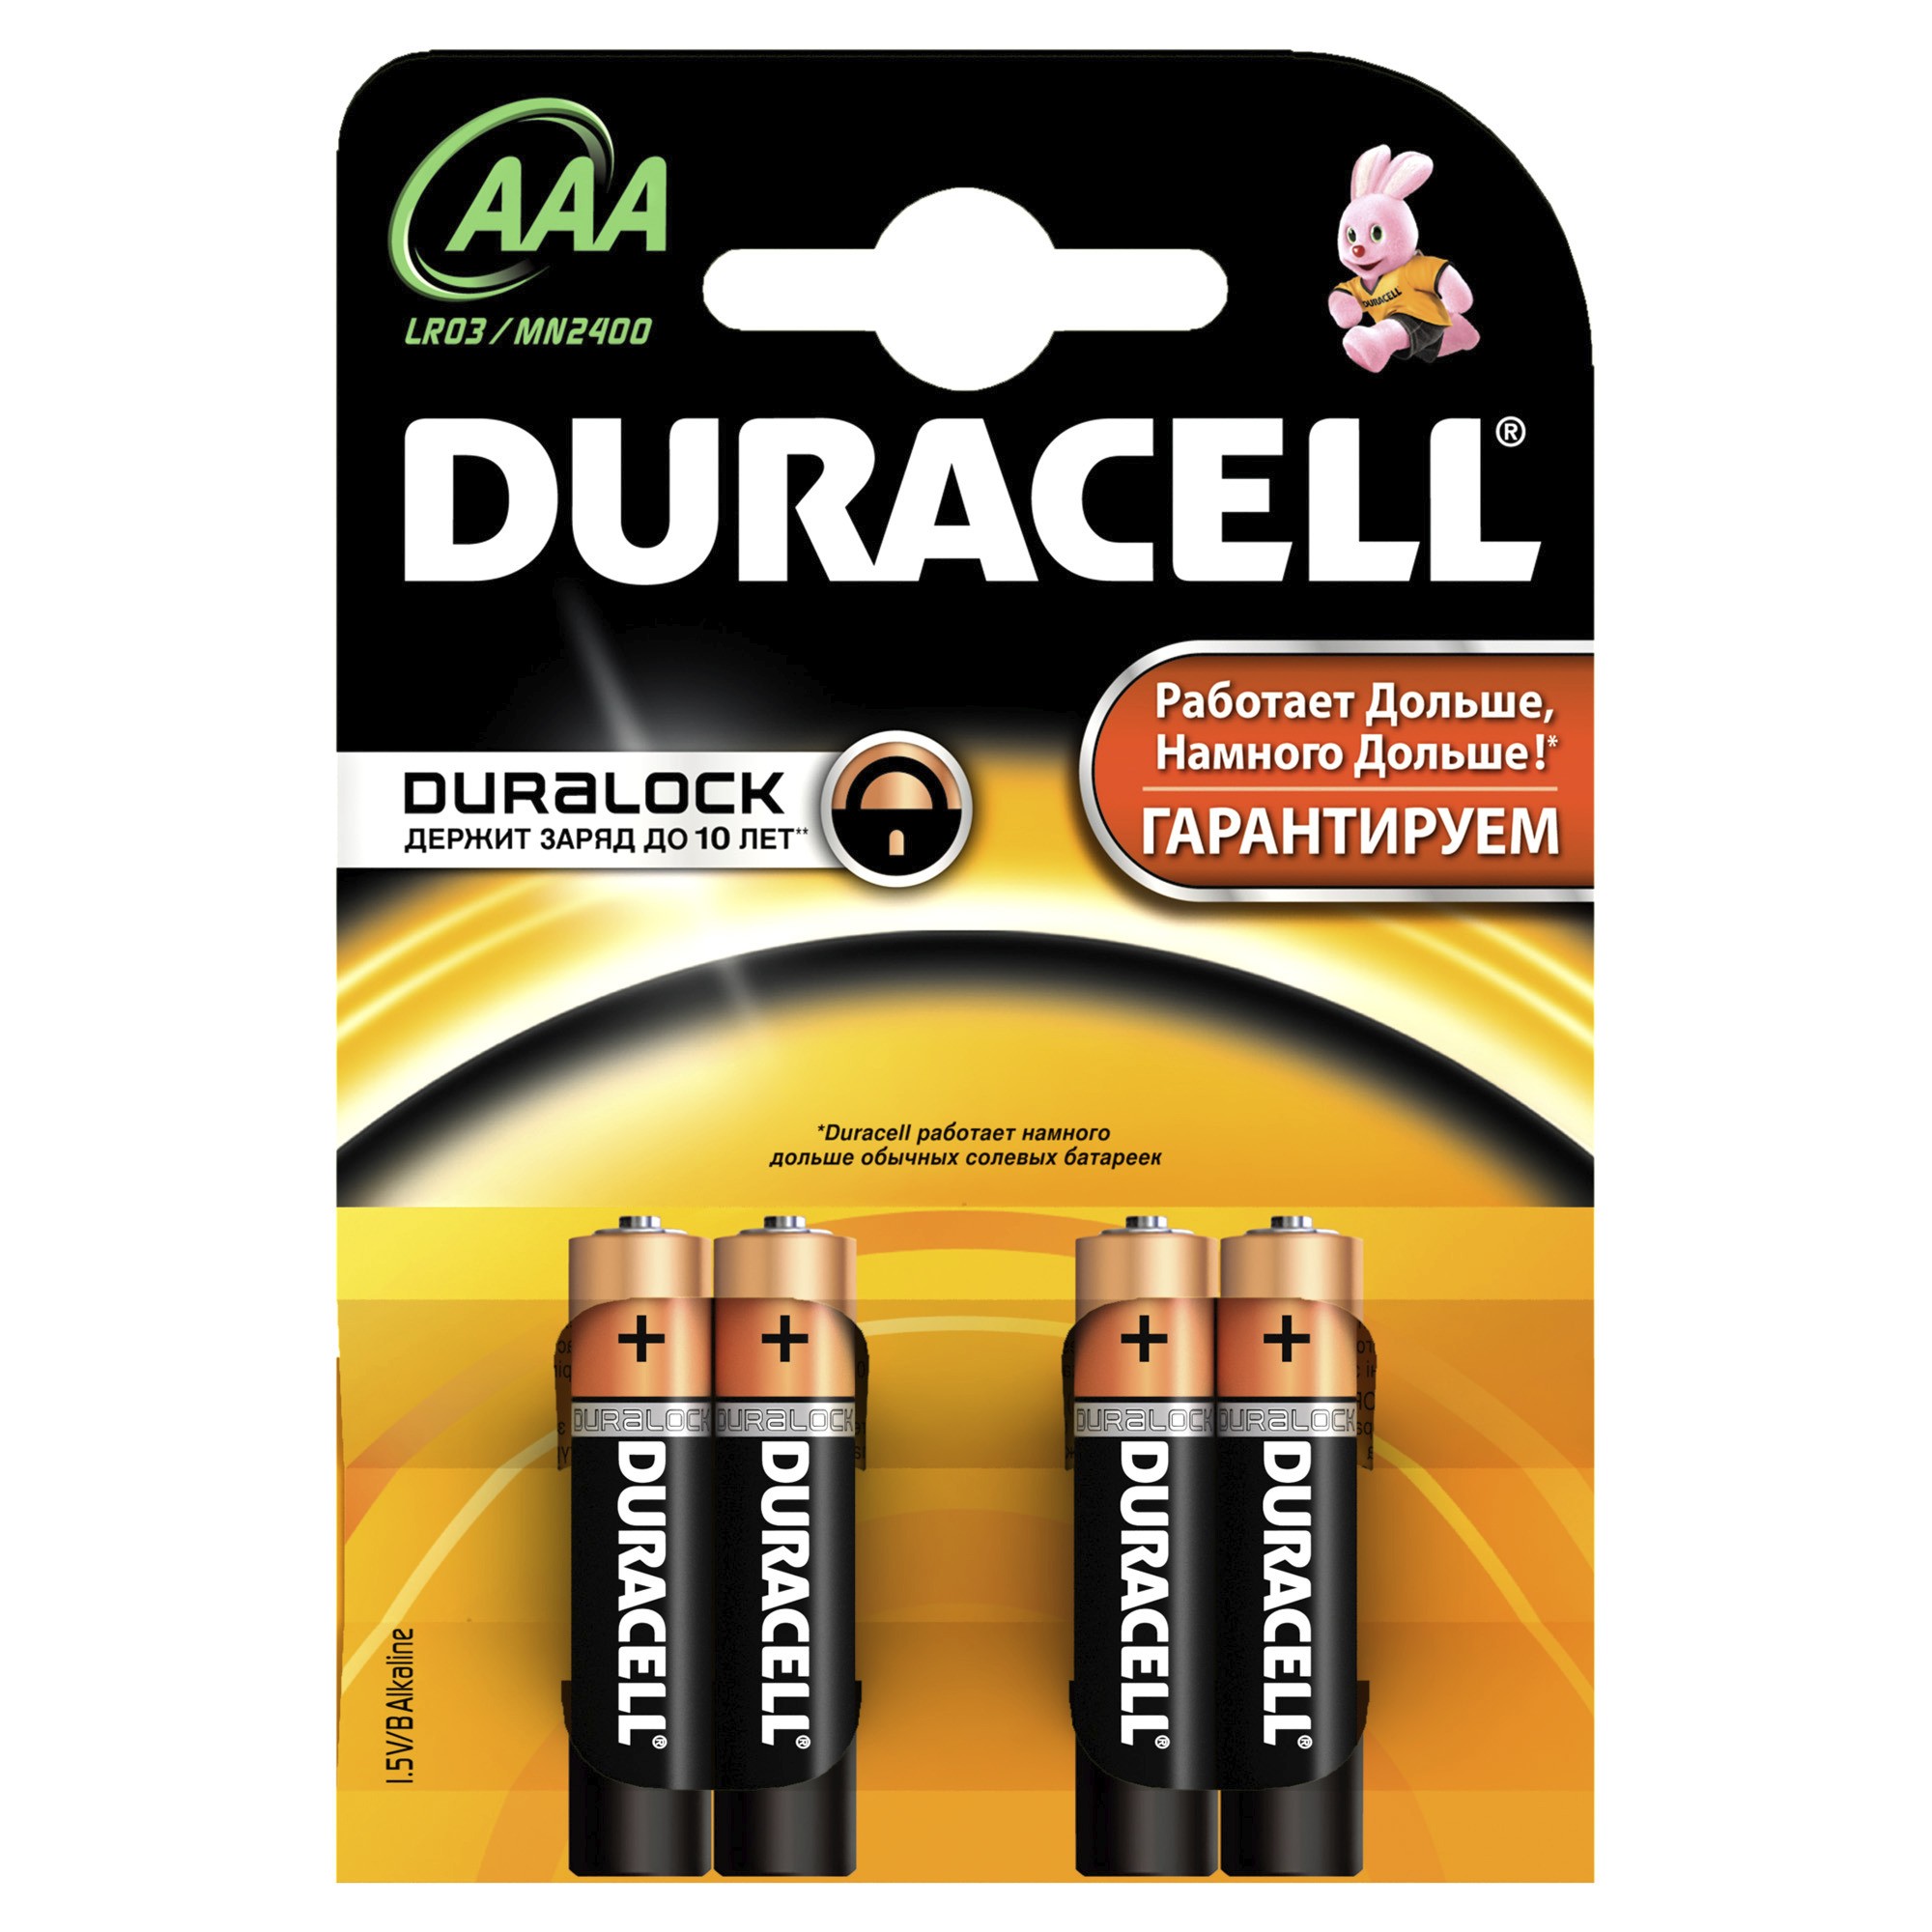 Батарейки Duracell Basic AAA K4 щелочной элемент питания (4шт.)